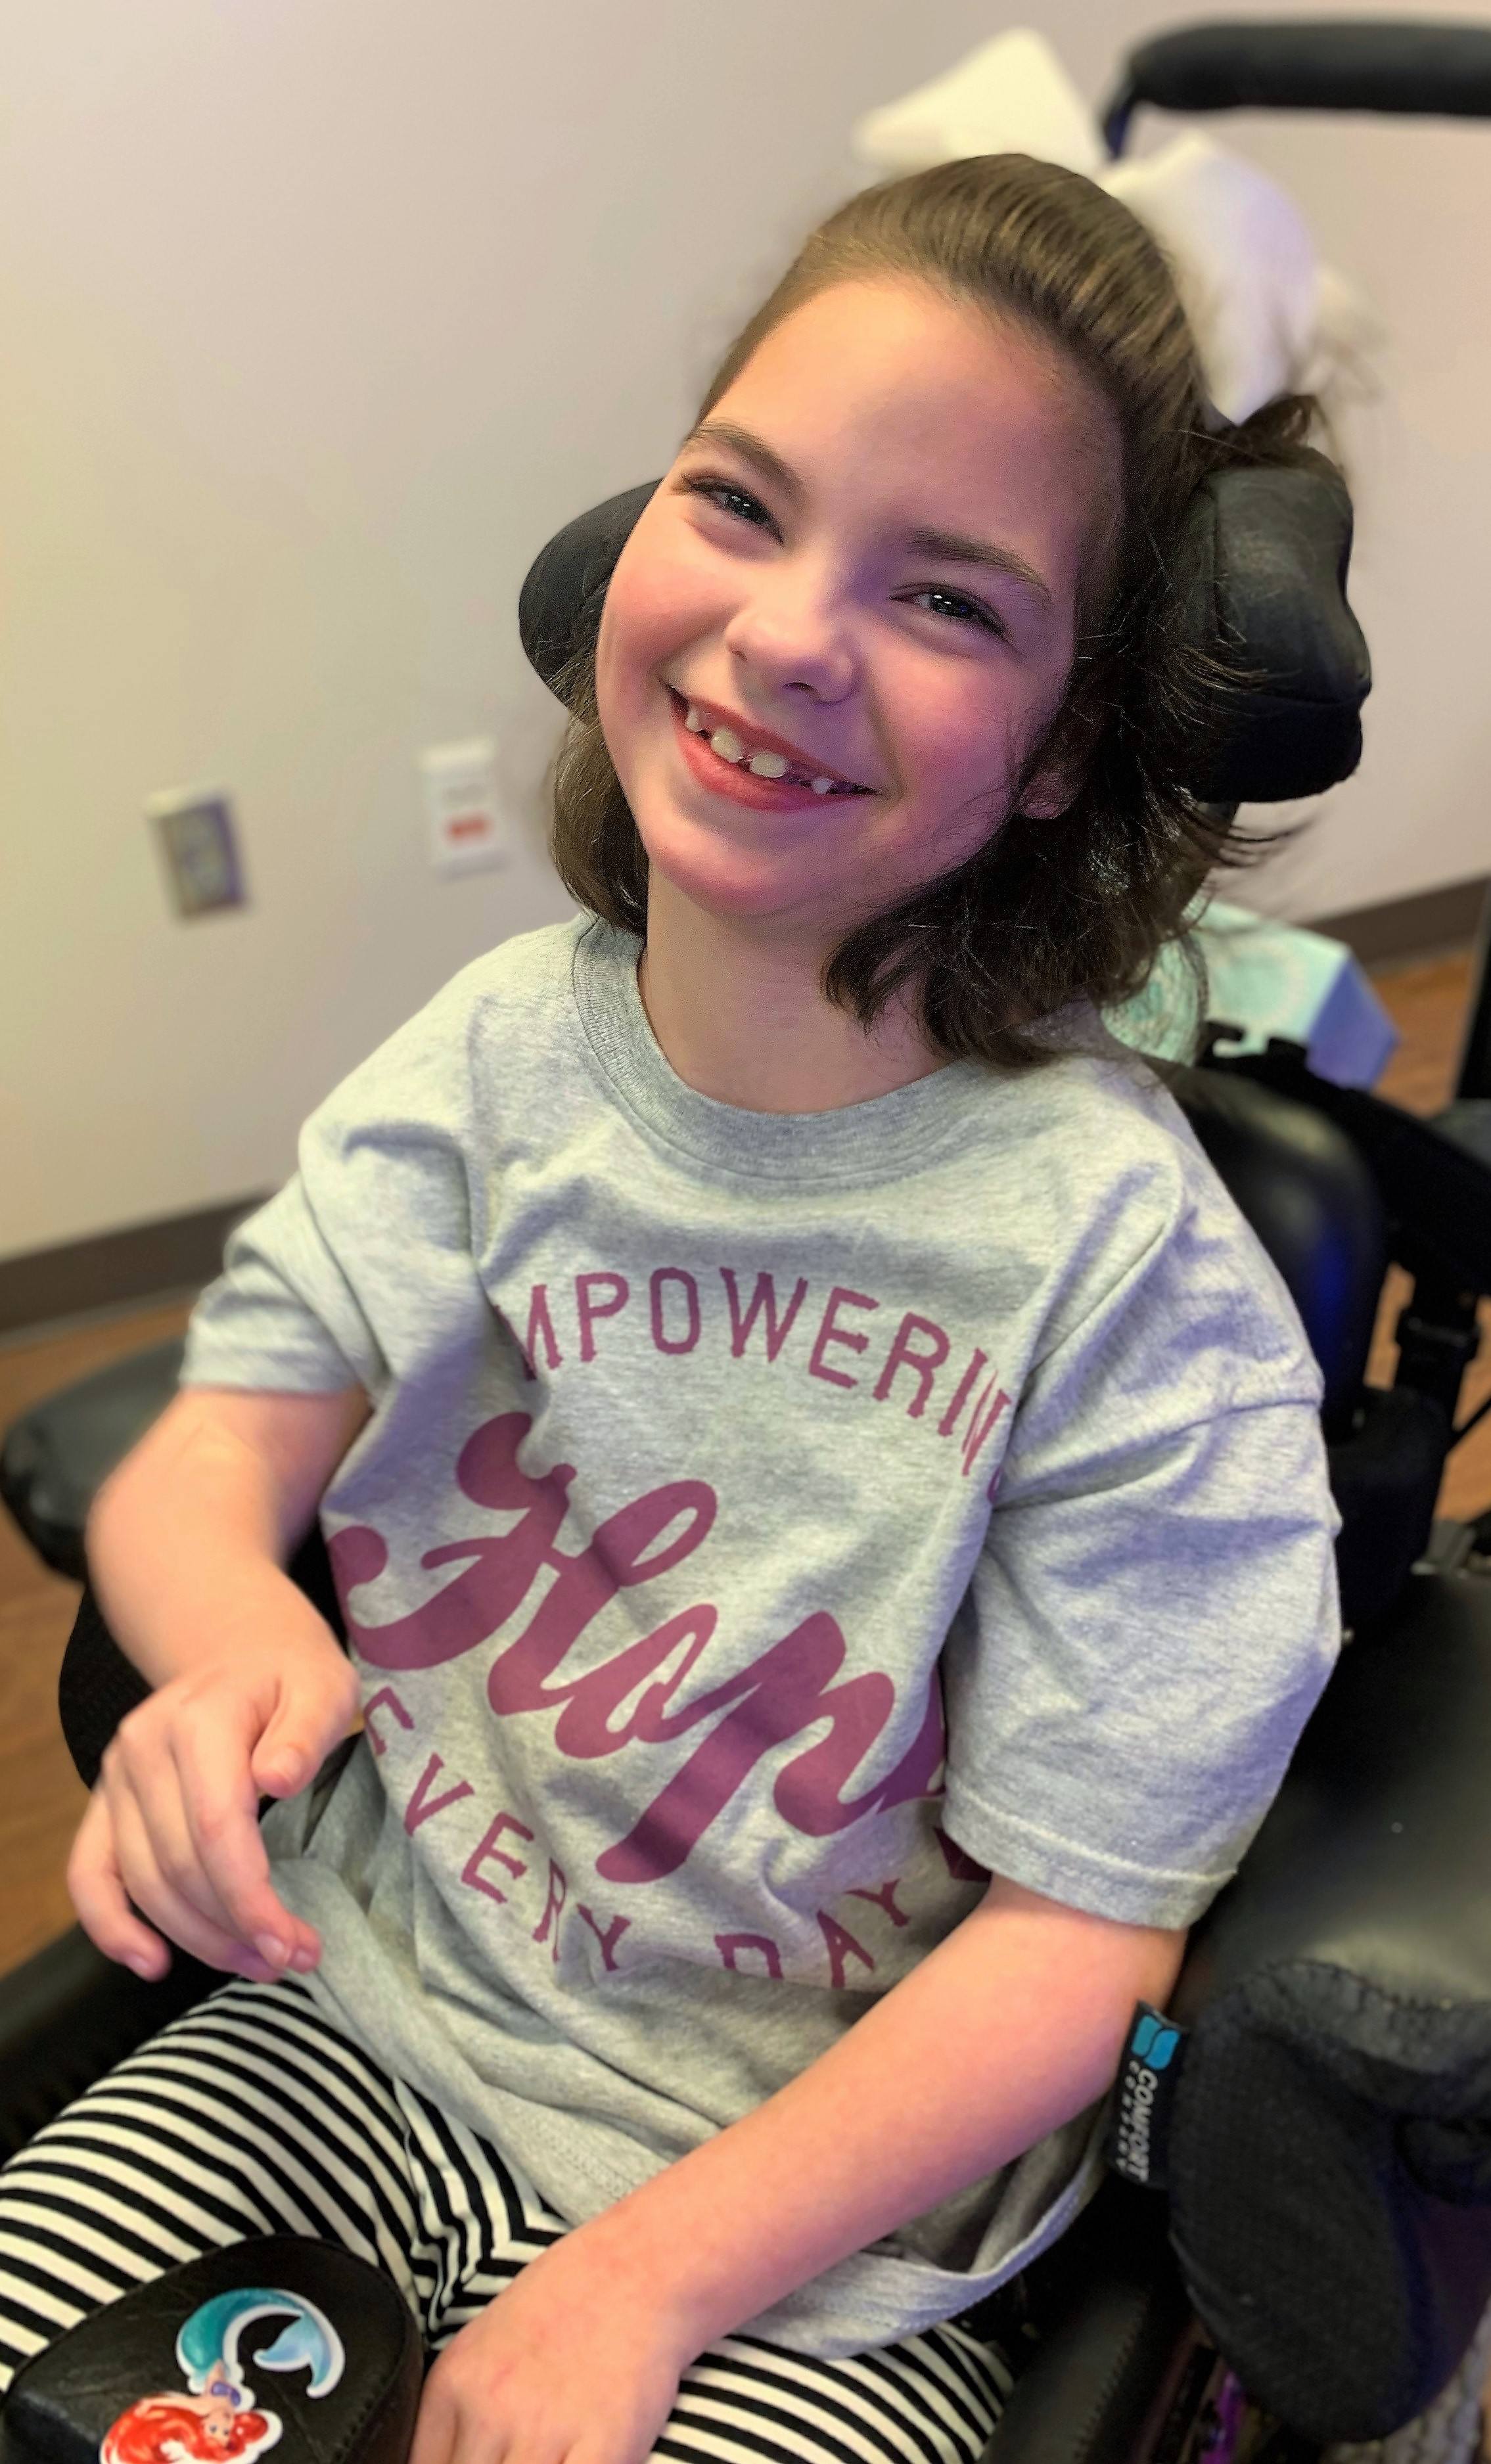 Little girl in wheelchair smiling